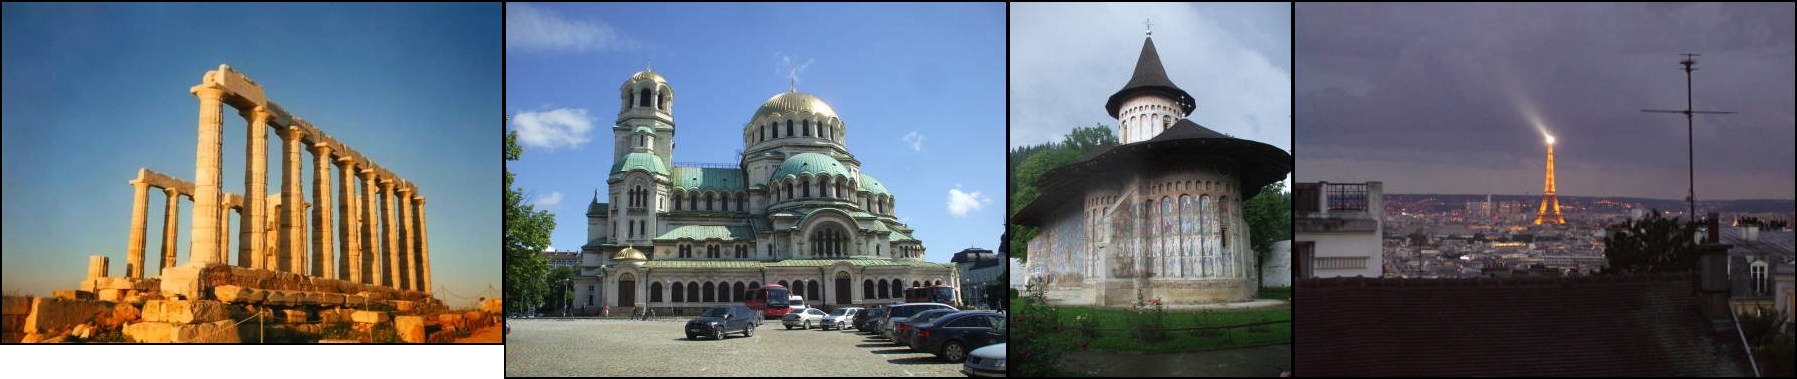 Temple of Poseidon at Cape Sounion, Greece; Aleksandr Nevsky Cathedral in Sofia, Bulgaria; Painted church in Moldova, Bucovina, north eastern Romania; Eiffel Tower in Paris, France.